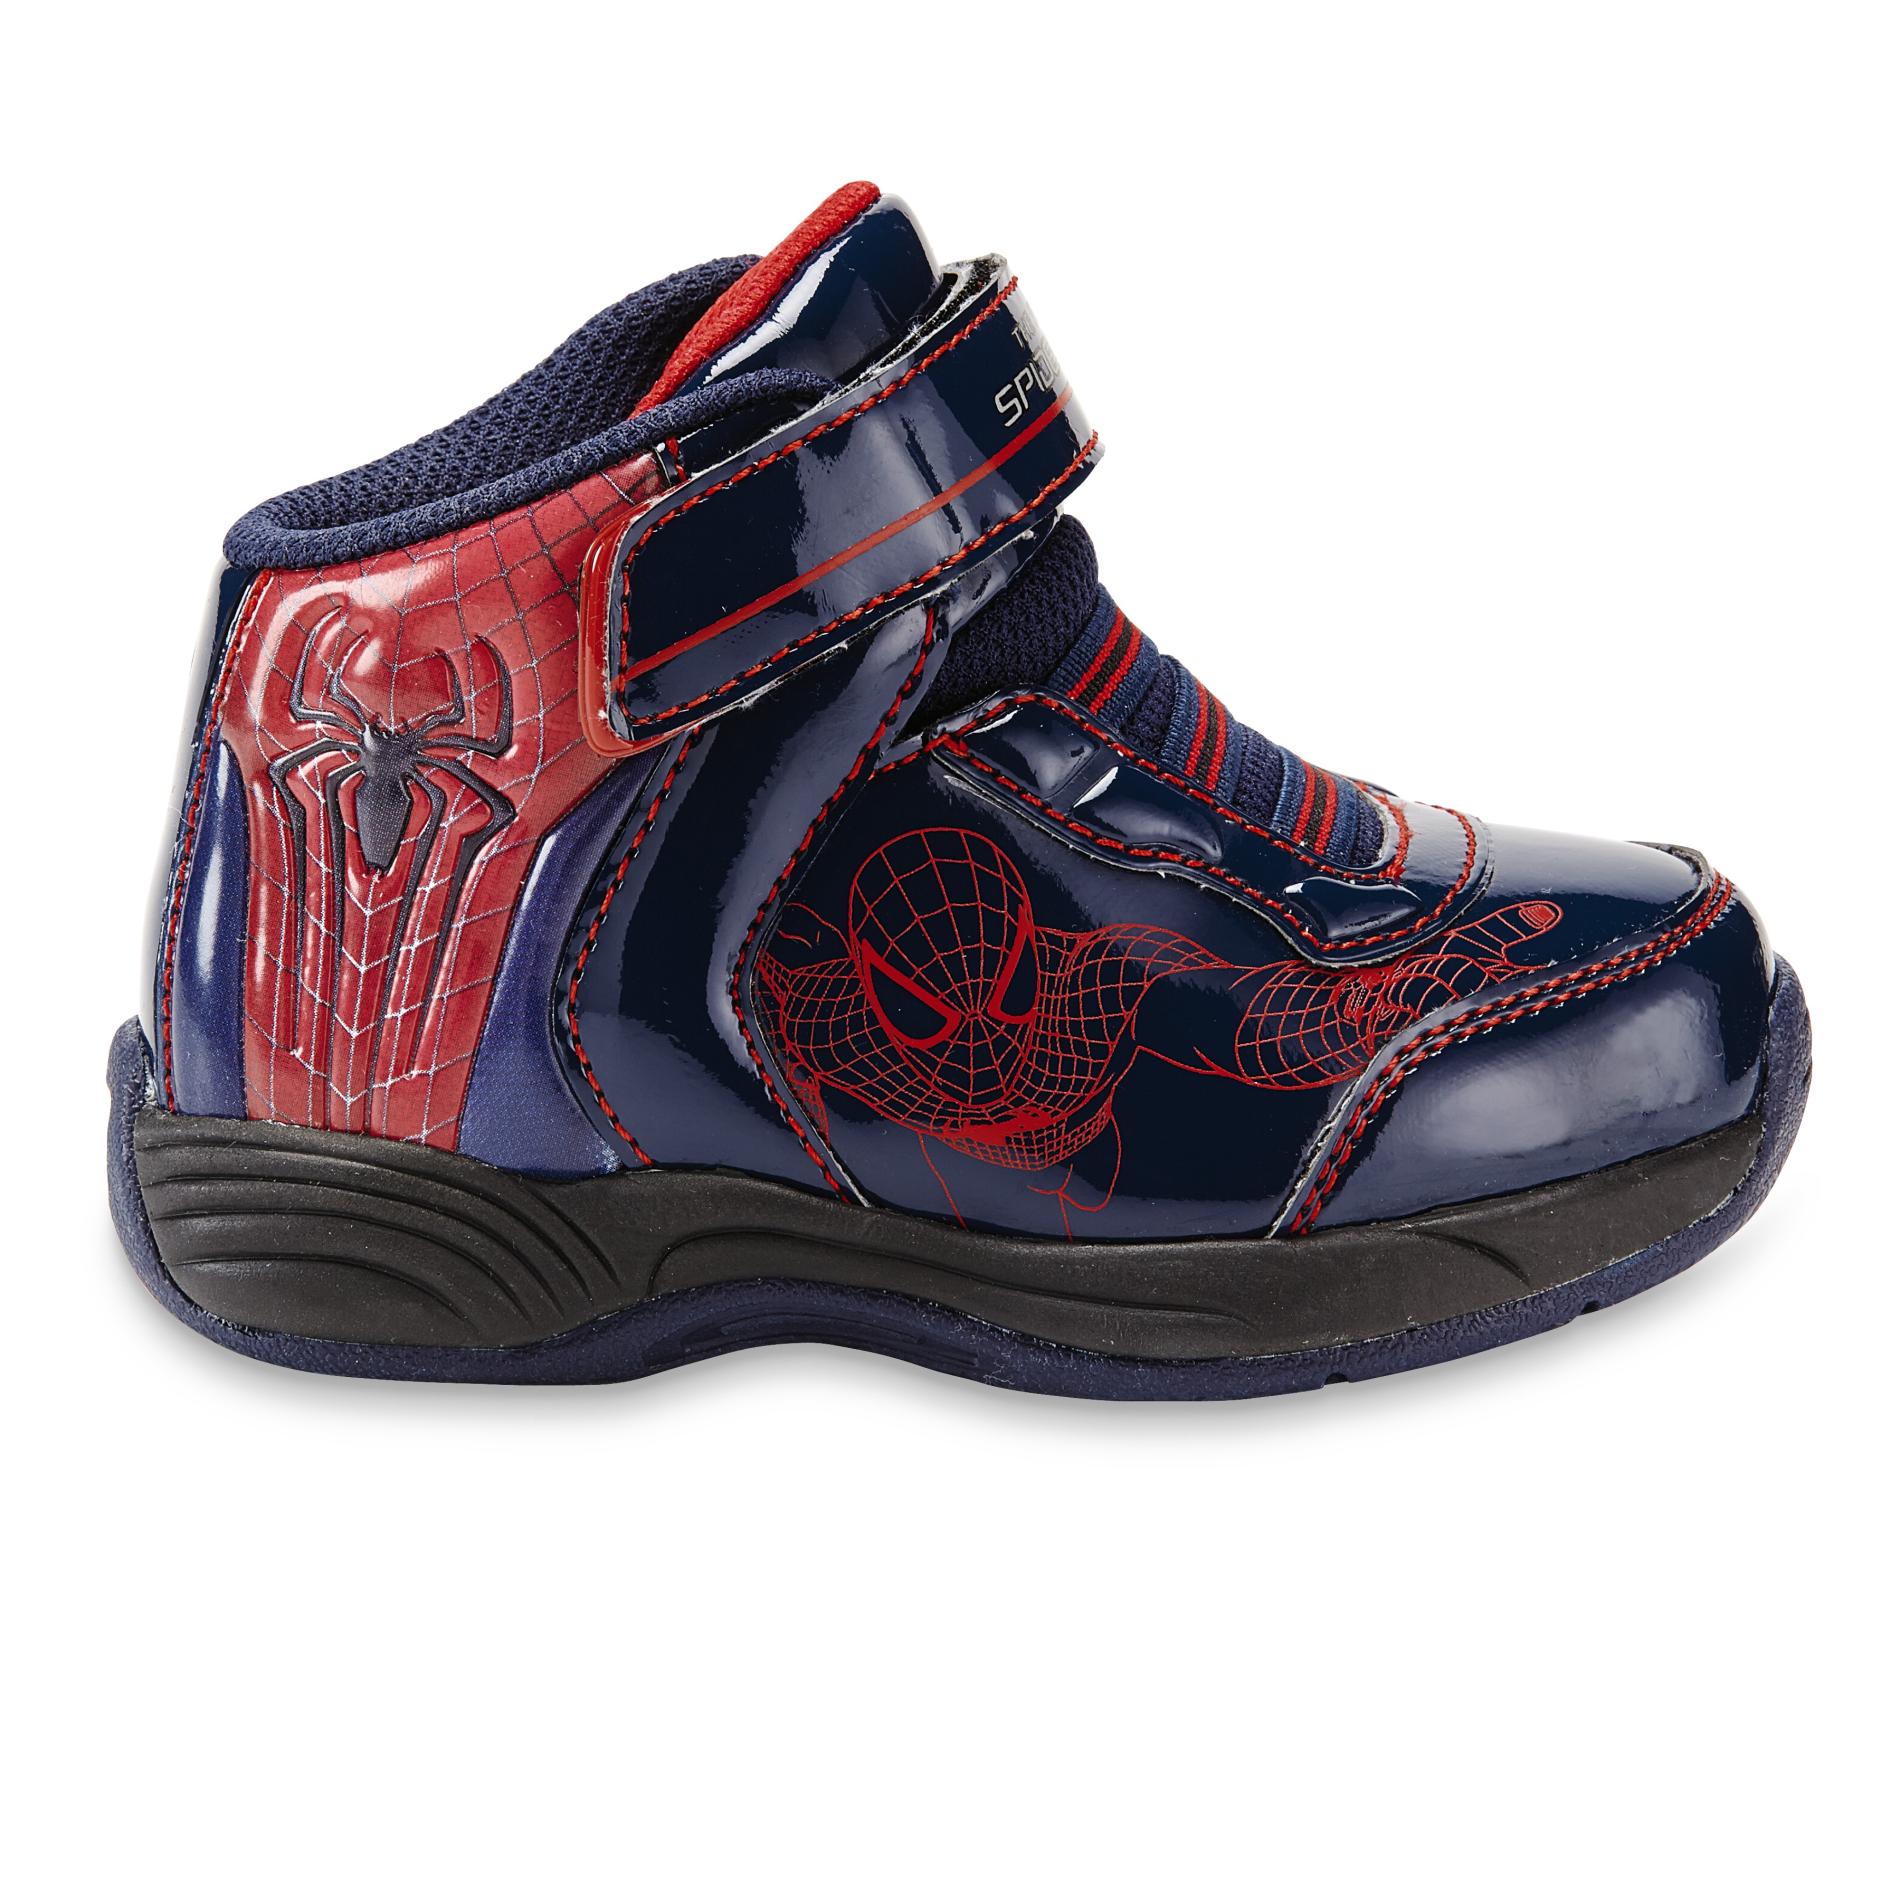 Marvel Spider-Man Toddler Boy's High-Top Basketball Shoe - Blue/Red